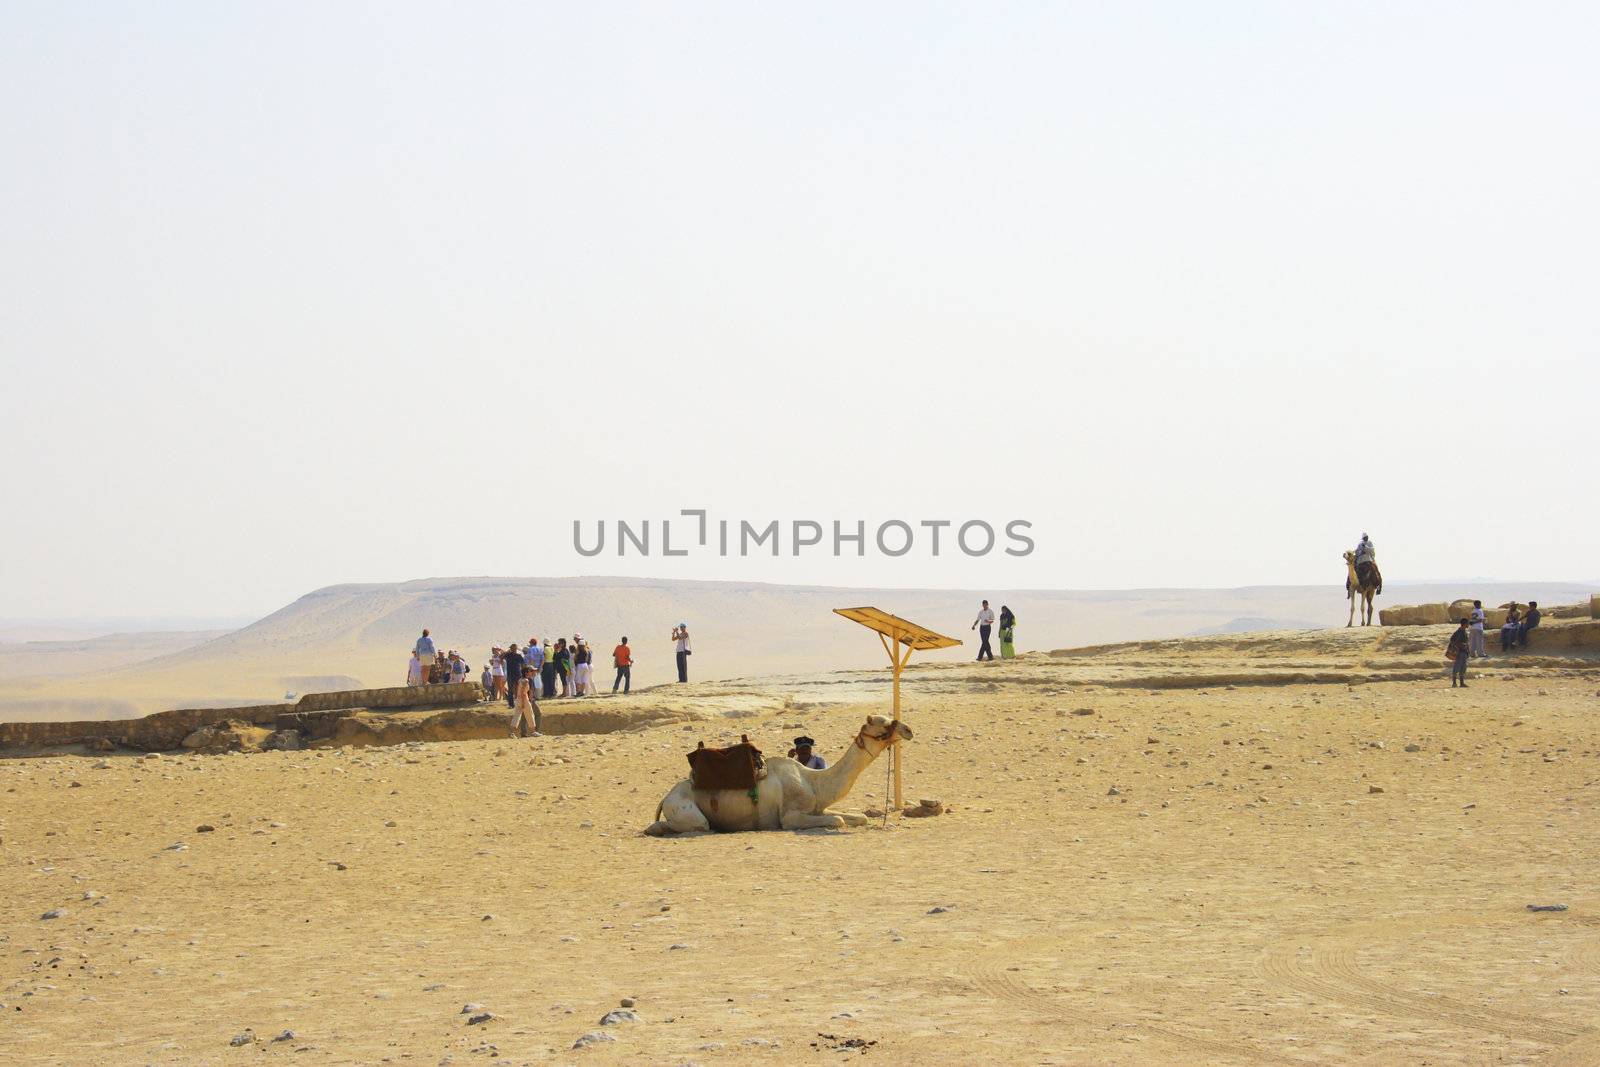 Arabian camel in desert by Kudryashka